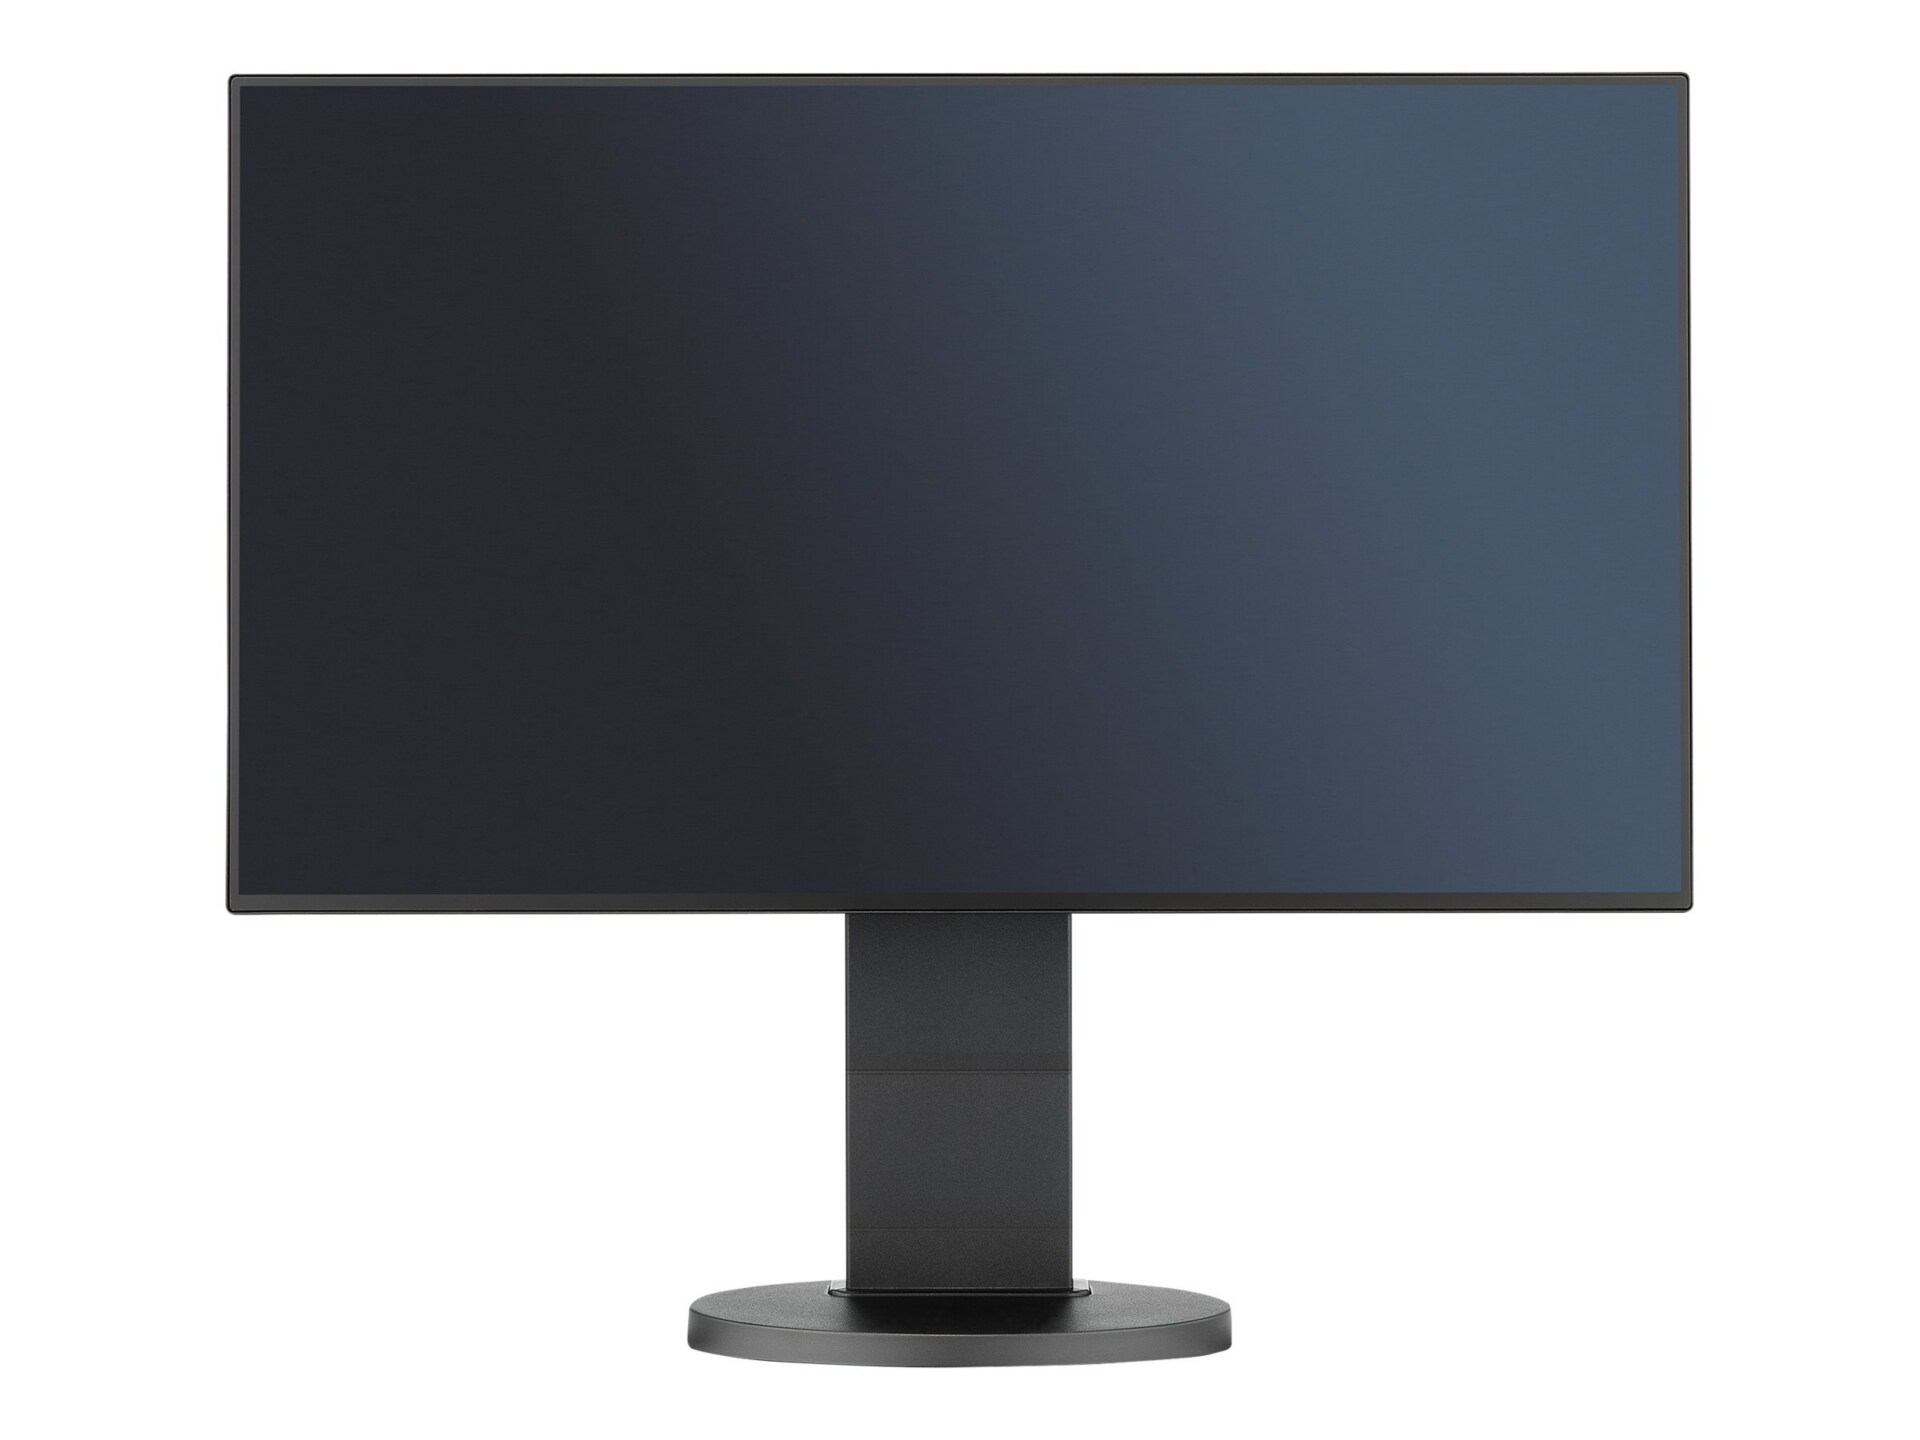 NEC MultiSync EX241UN-BK - LED monitor - Full HD (1080p) - 24"